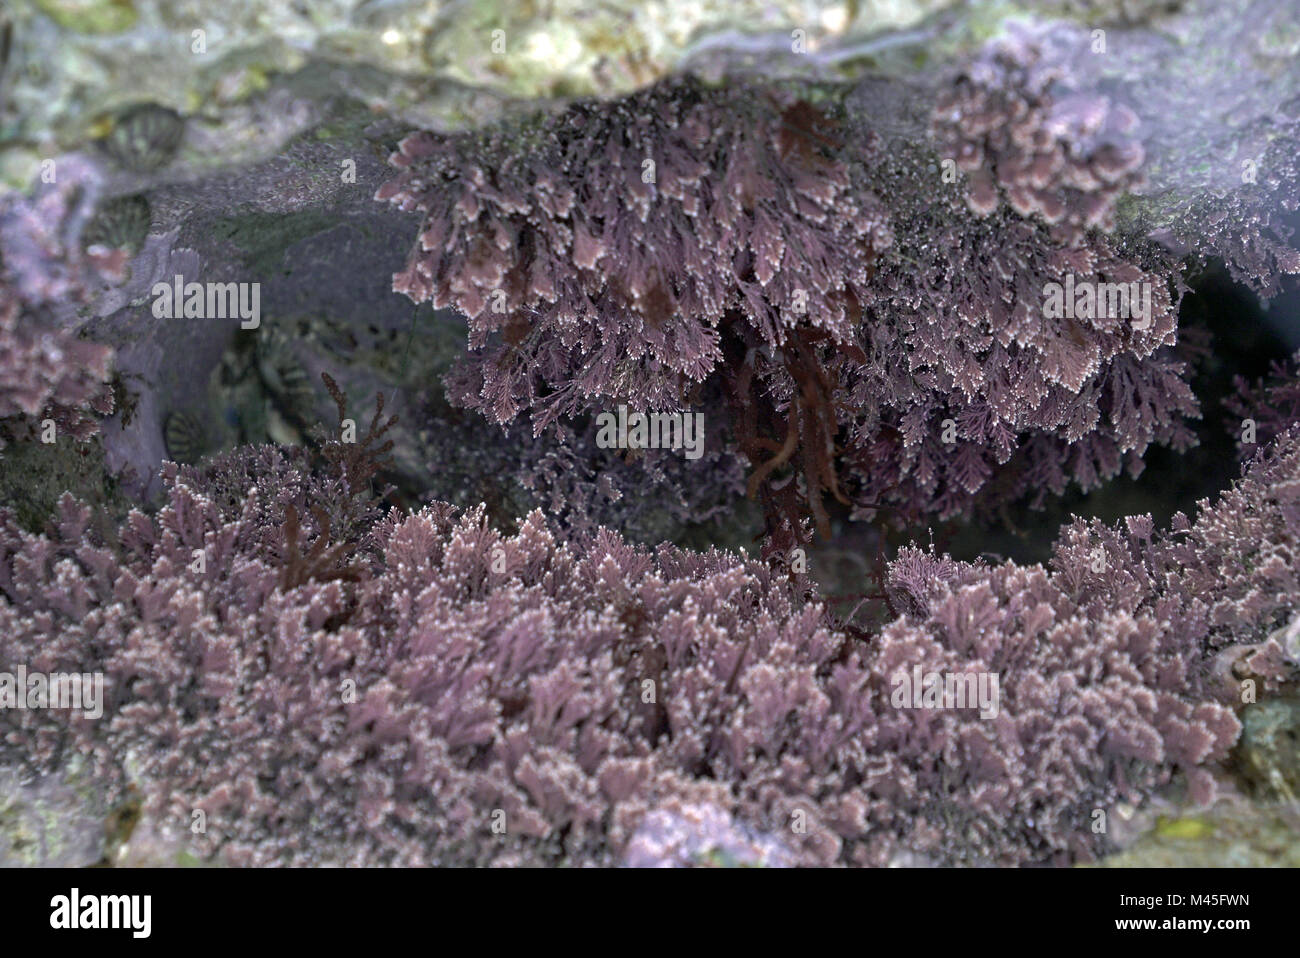 Corallina officinali, Red Seaweed on Portland stone, Isle of Portland, UK (1 of 4) Stock Photo